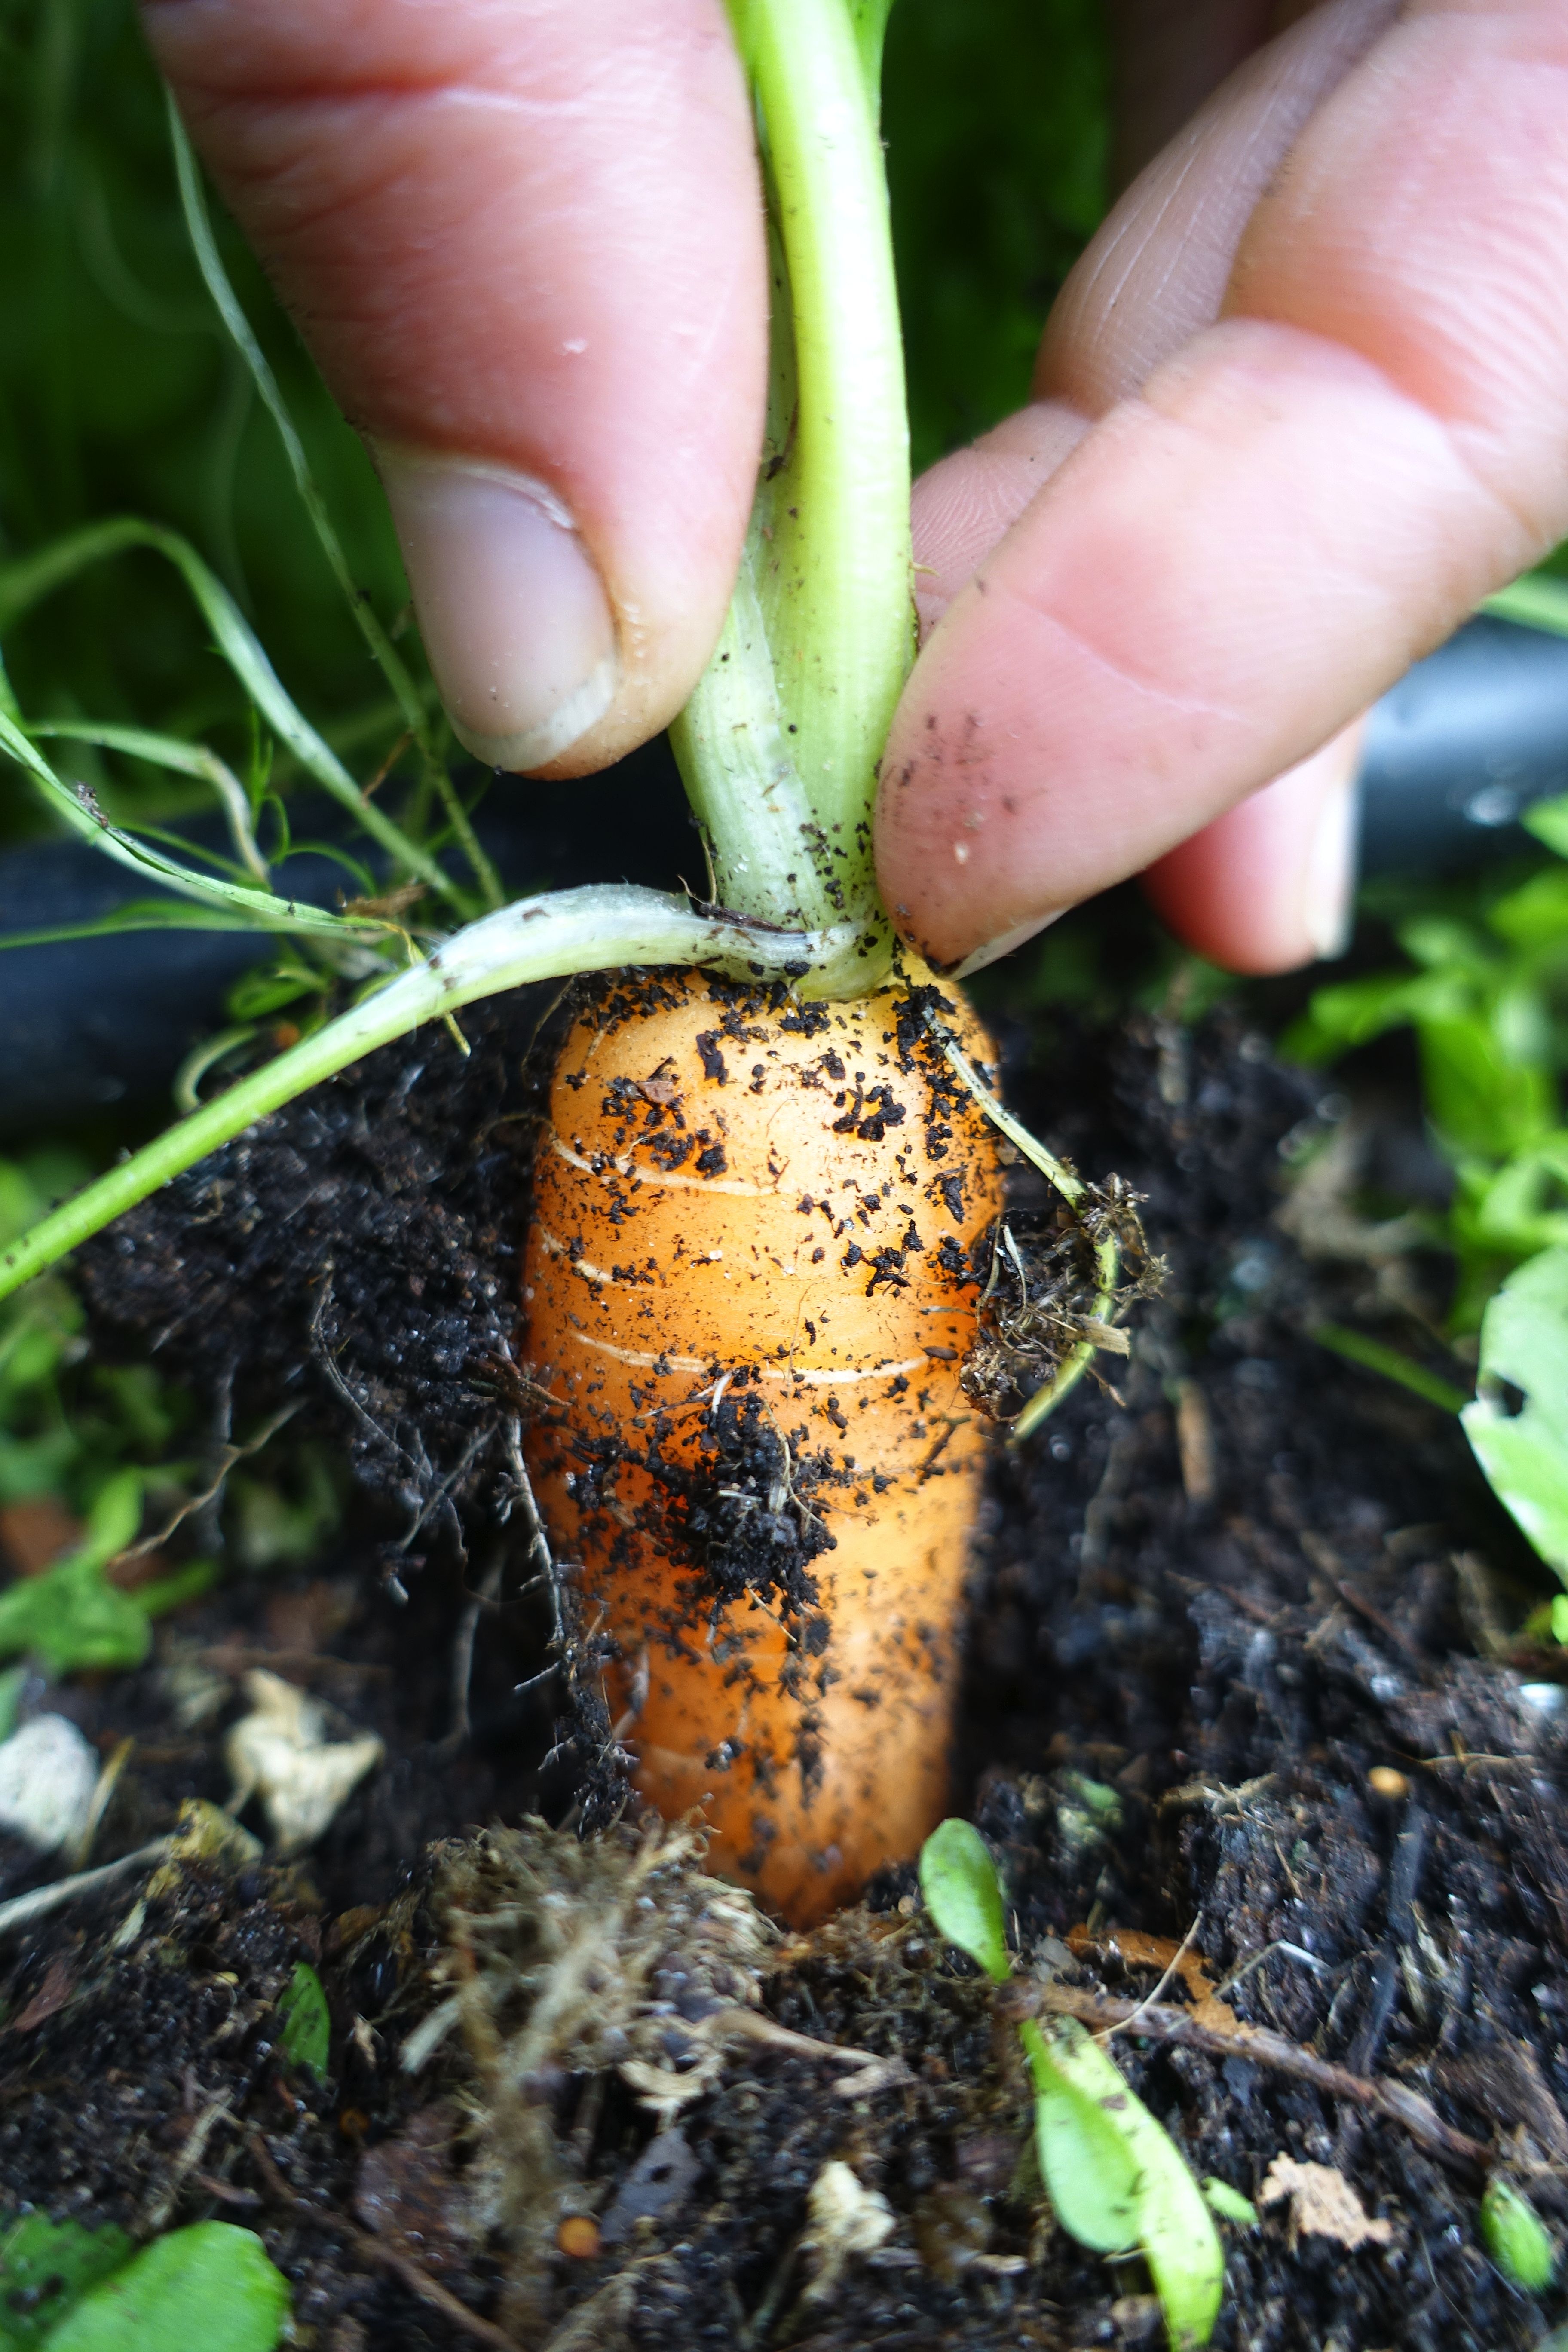 Två fingrar drar upp en fin morot ur svart jord. Harvesting carrots, pulling a carrot from the soil. 